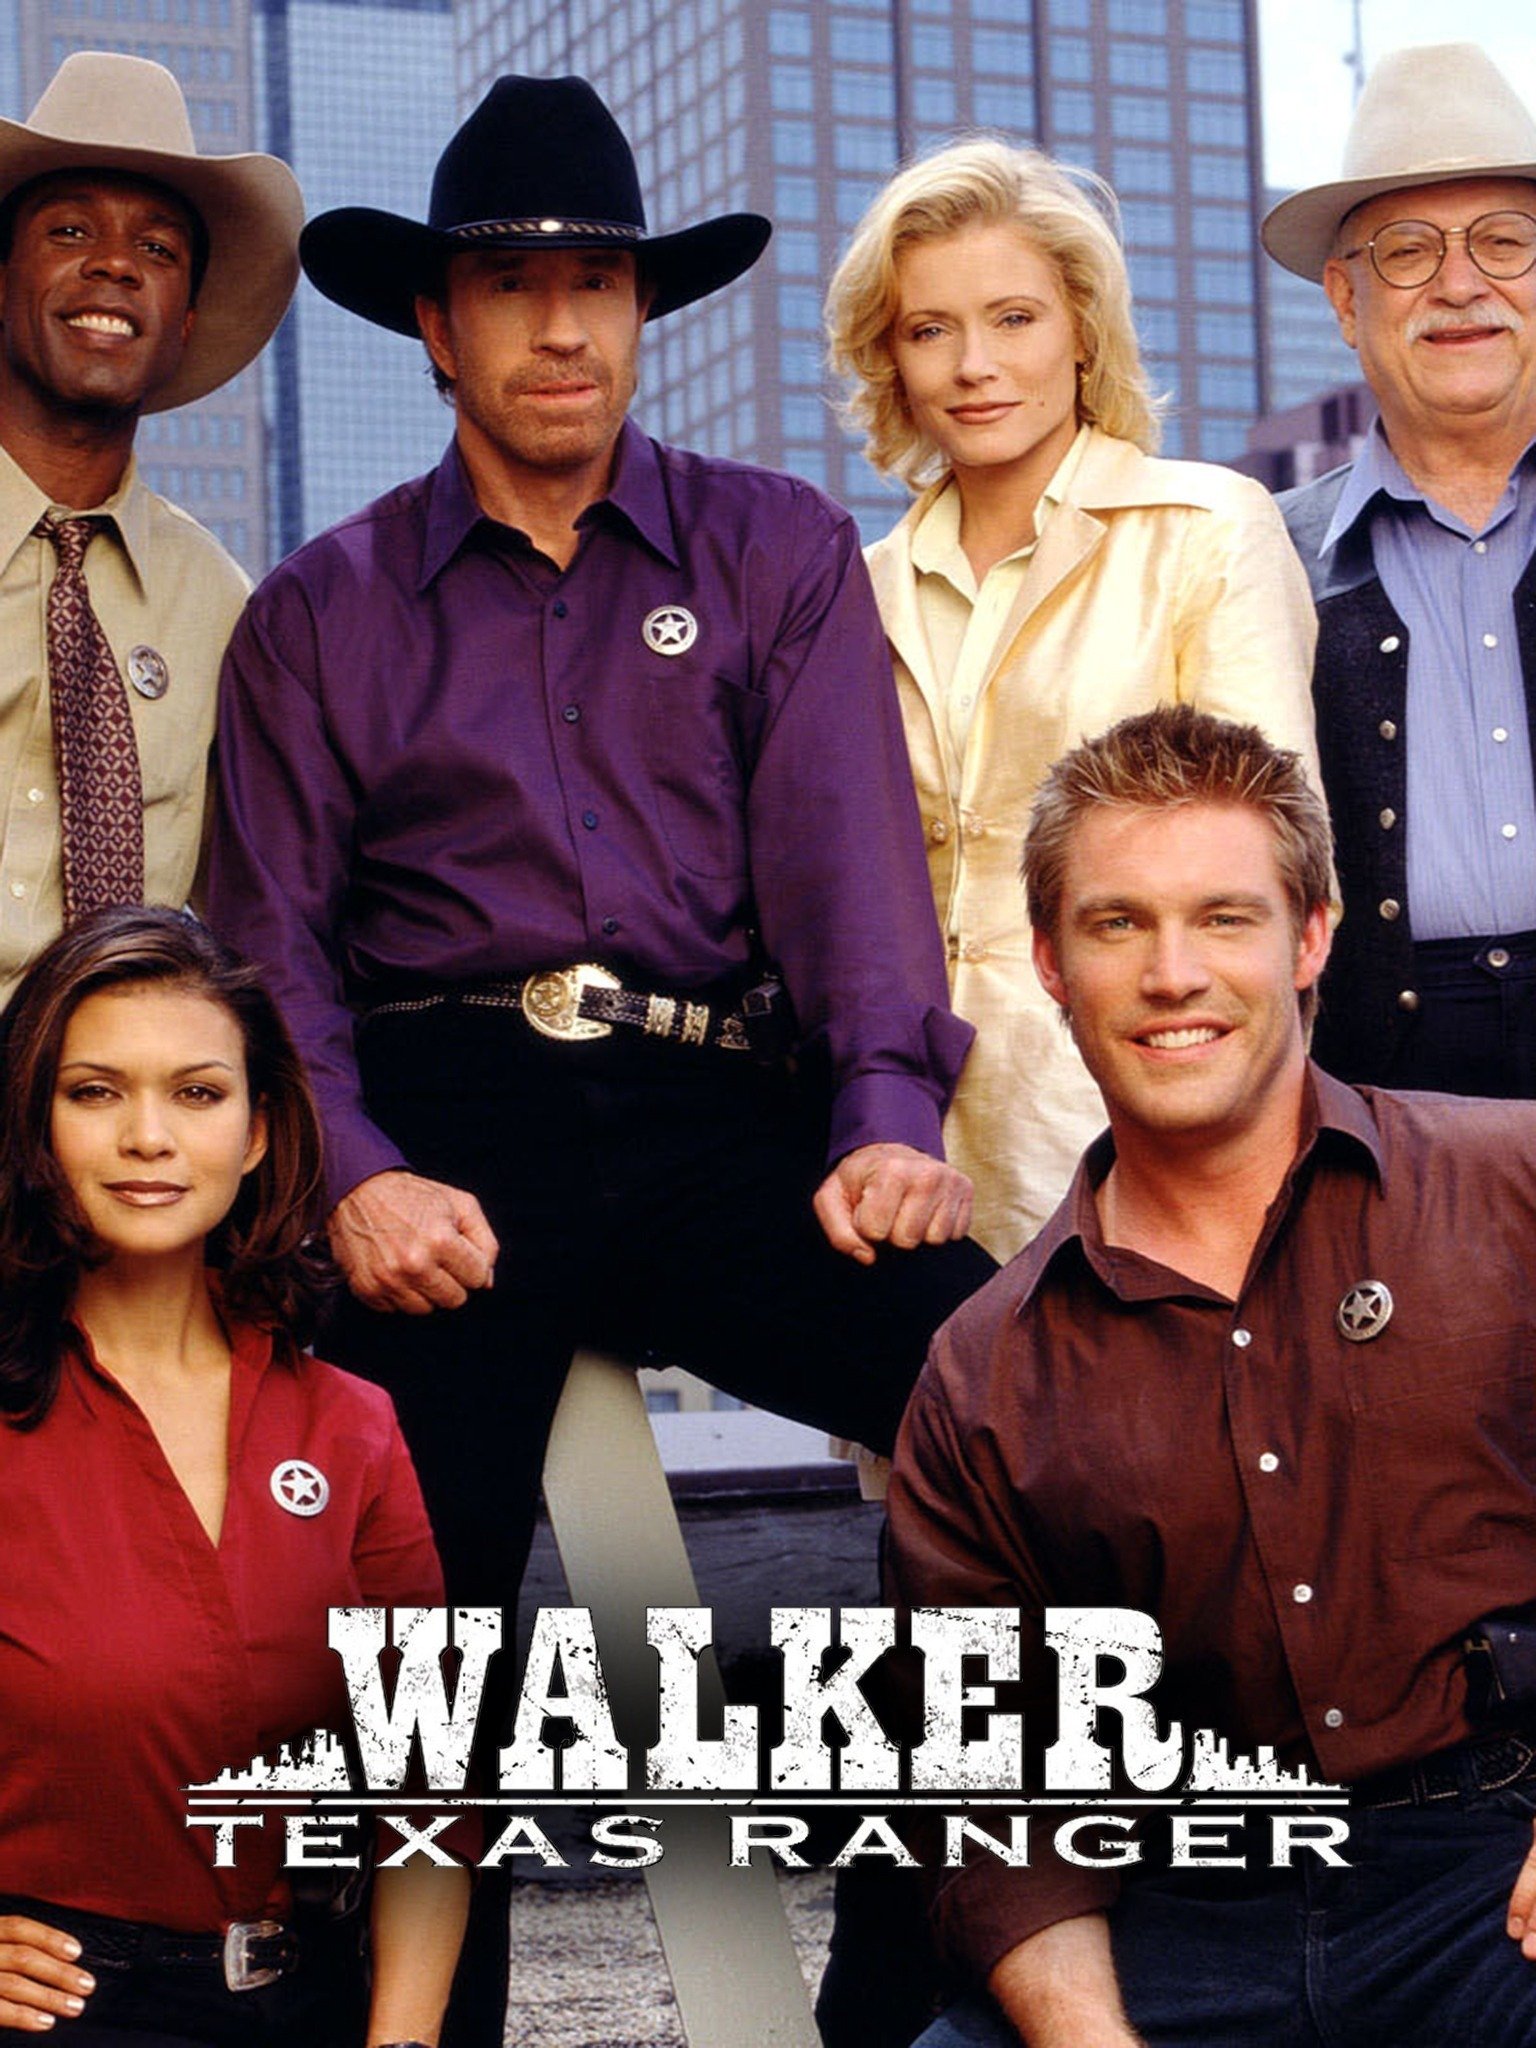 The Last Texas Ranger: They don't make 'Rangers' like Walker